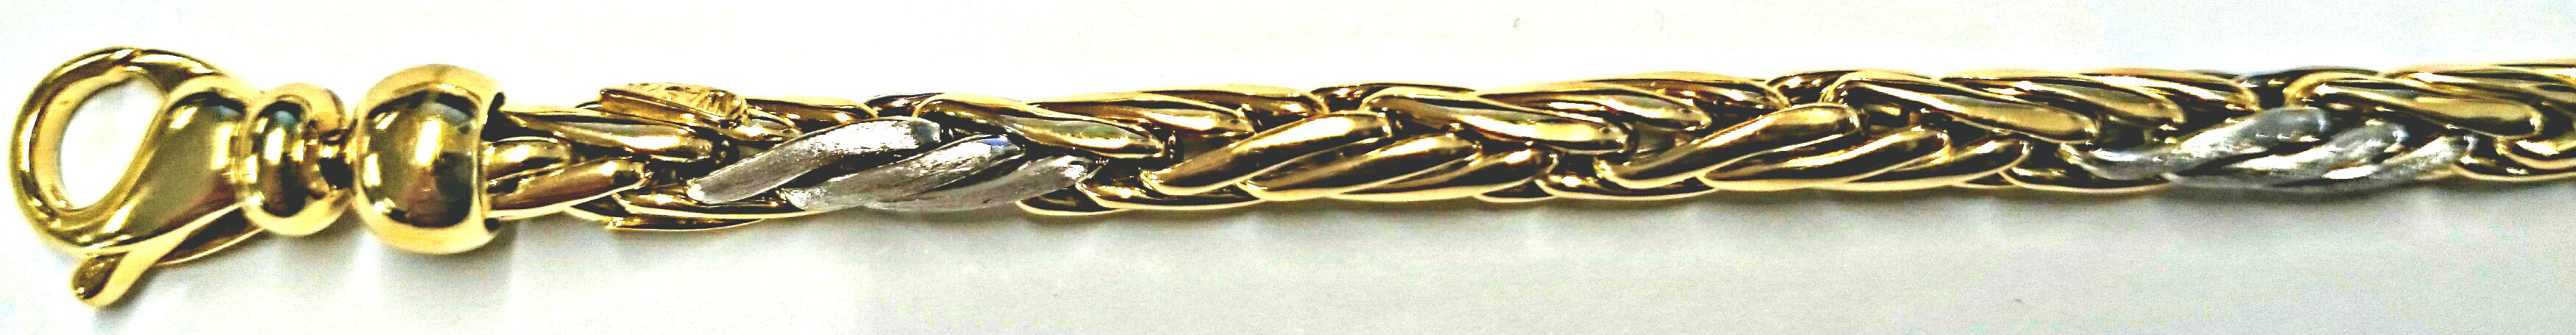 Armband Bicolor (Gelb-/Weissgold)  750 Handarbeit 20cm